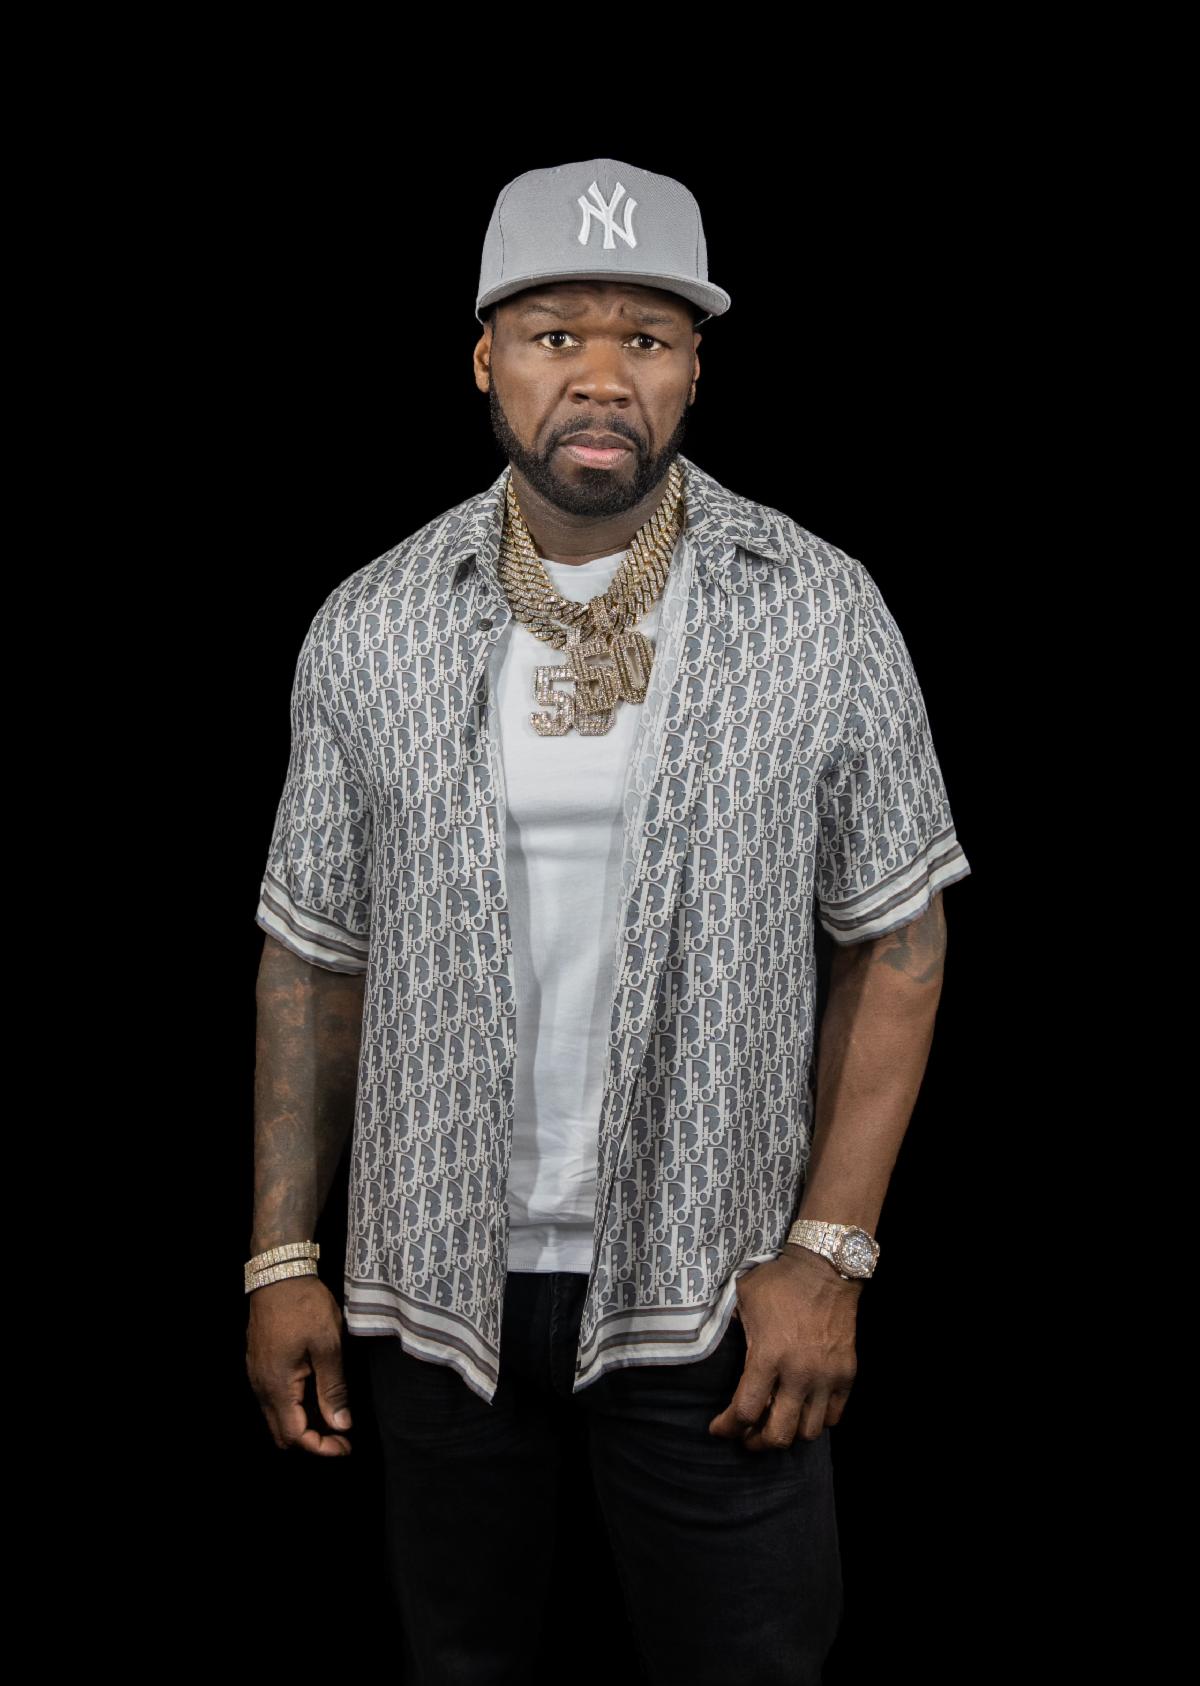 Curtis "50 Cent" Jackson